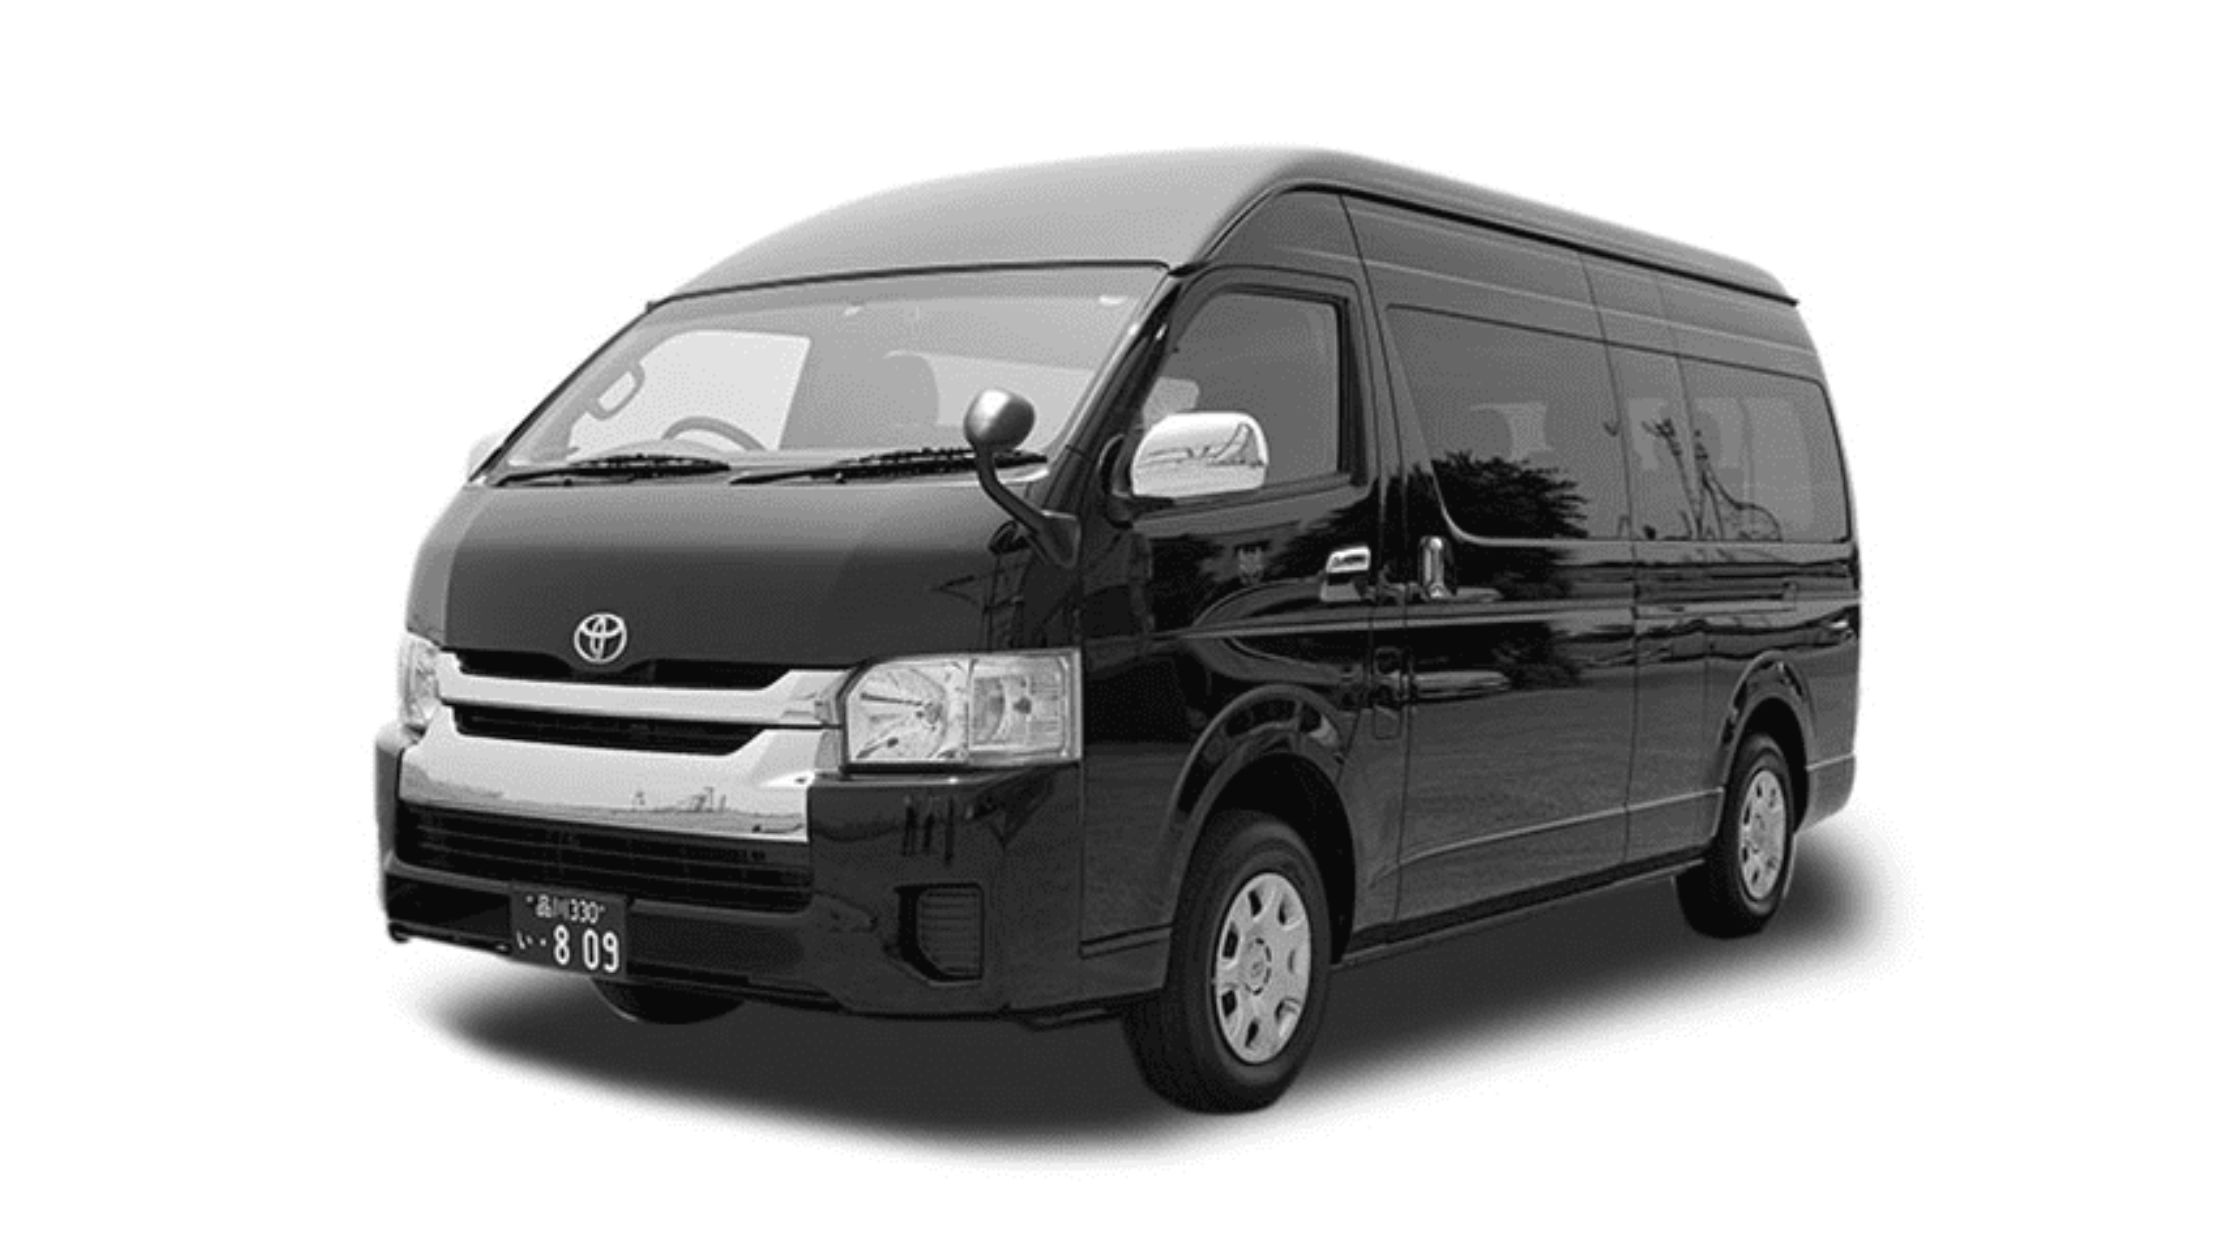 Toyota HiAce Van Hire - Toyota Commuter Van 12-Seater Hire, Brisbane & Gold Coast | Sky Transfers